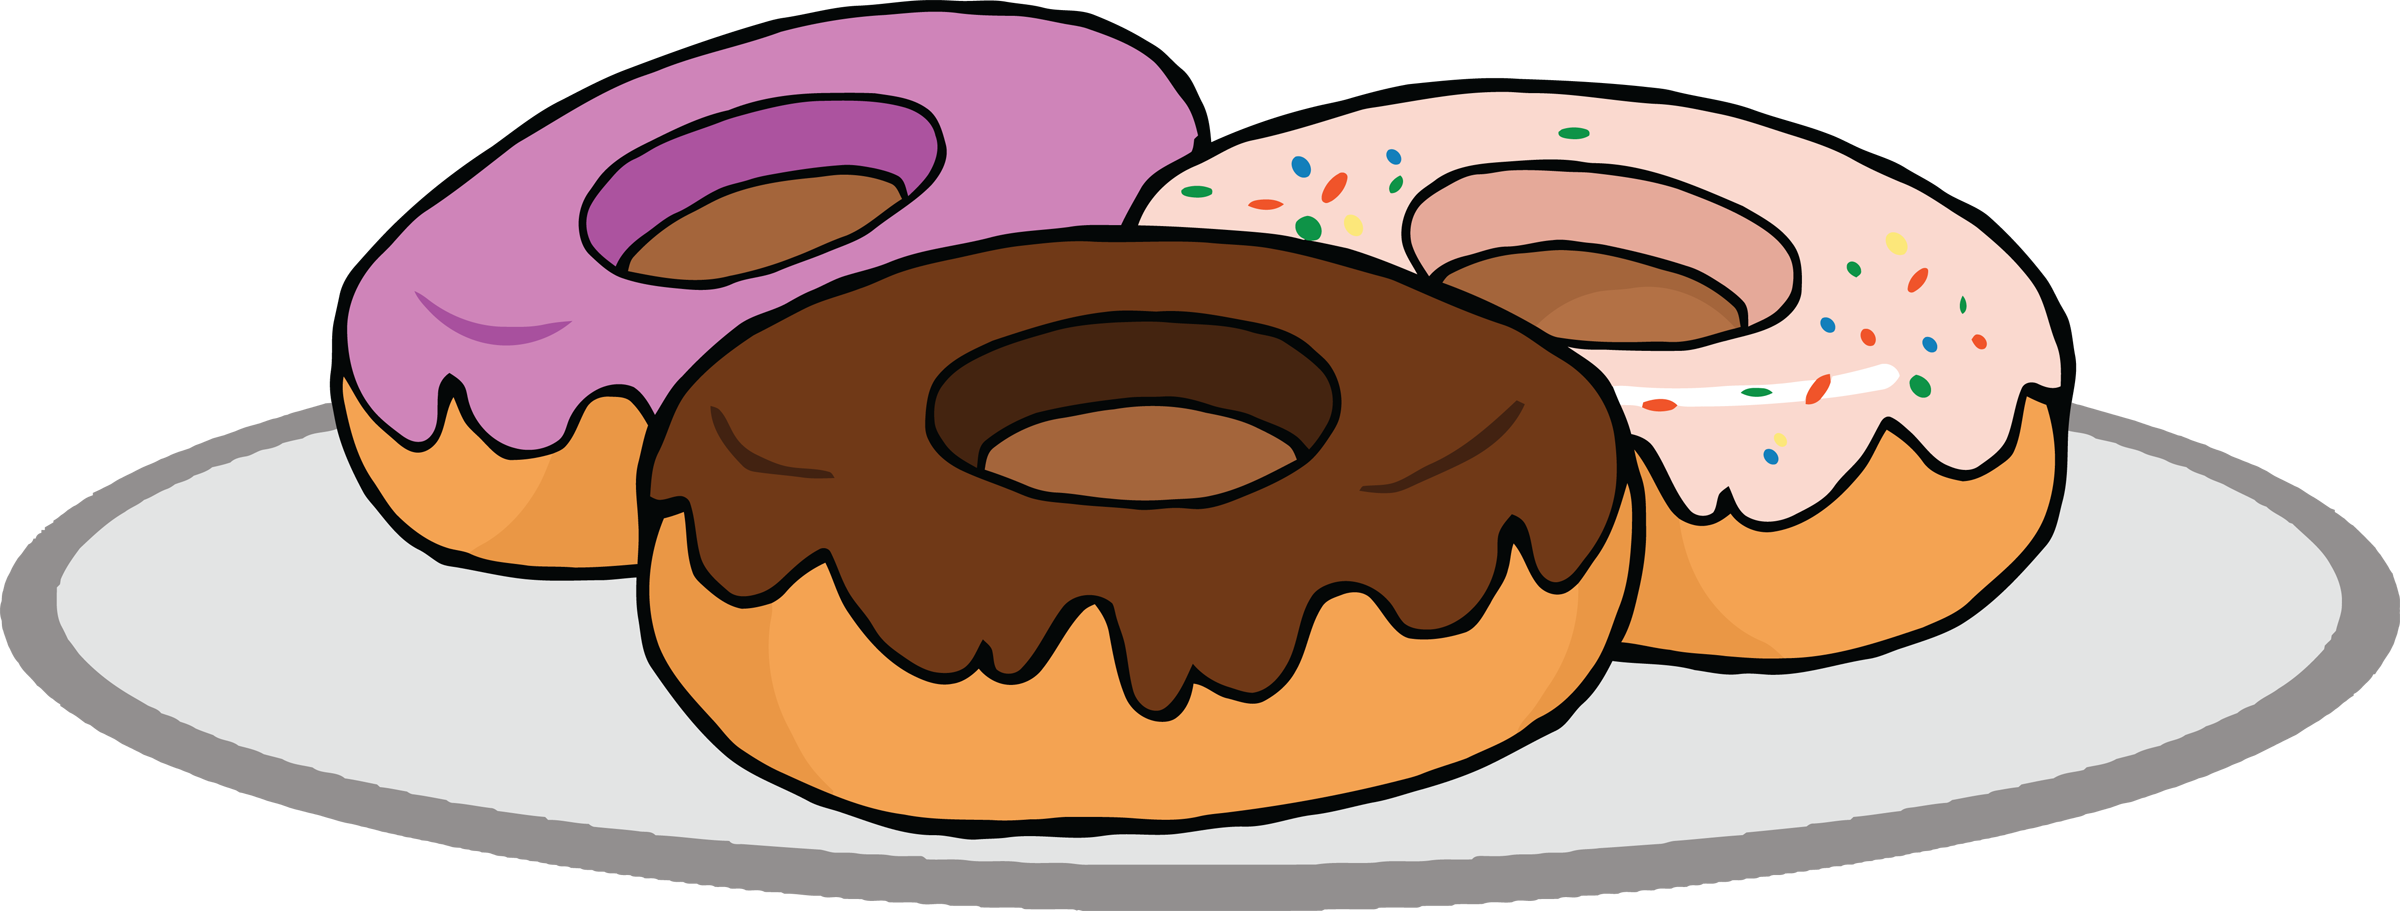 Doughnut donut clipart free clip art image 